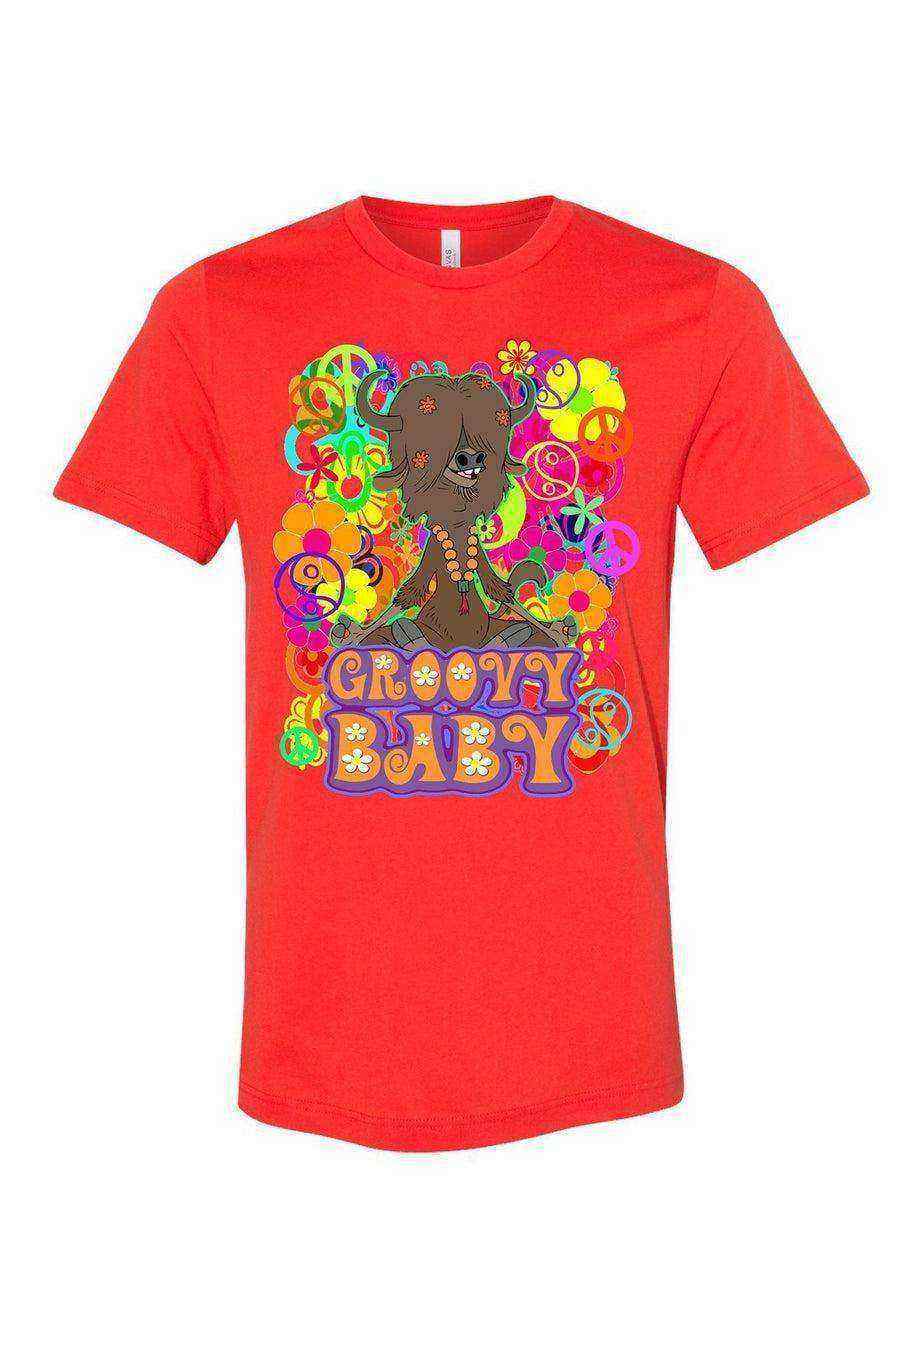 Toddler | Groovy Yak Yax Shirt | Zootopia Shirt - Dylan's Tees